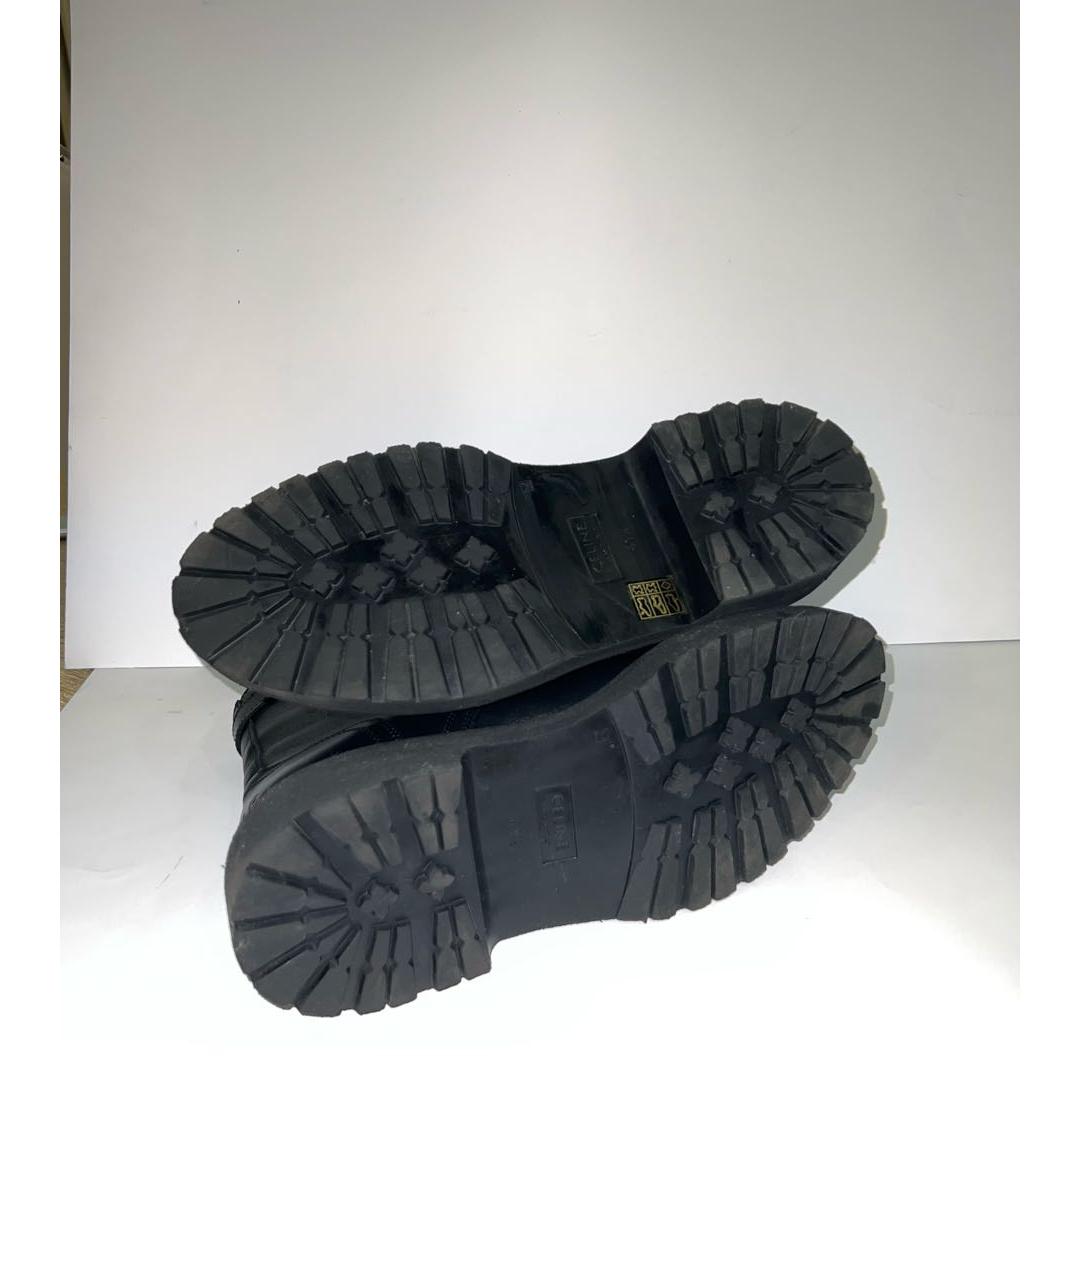 CELINE PRE-OWNED Черные кожаные ботинки, фото 5